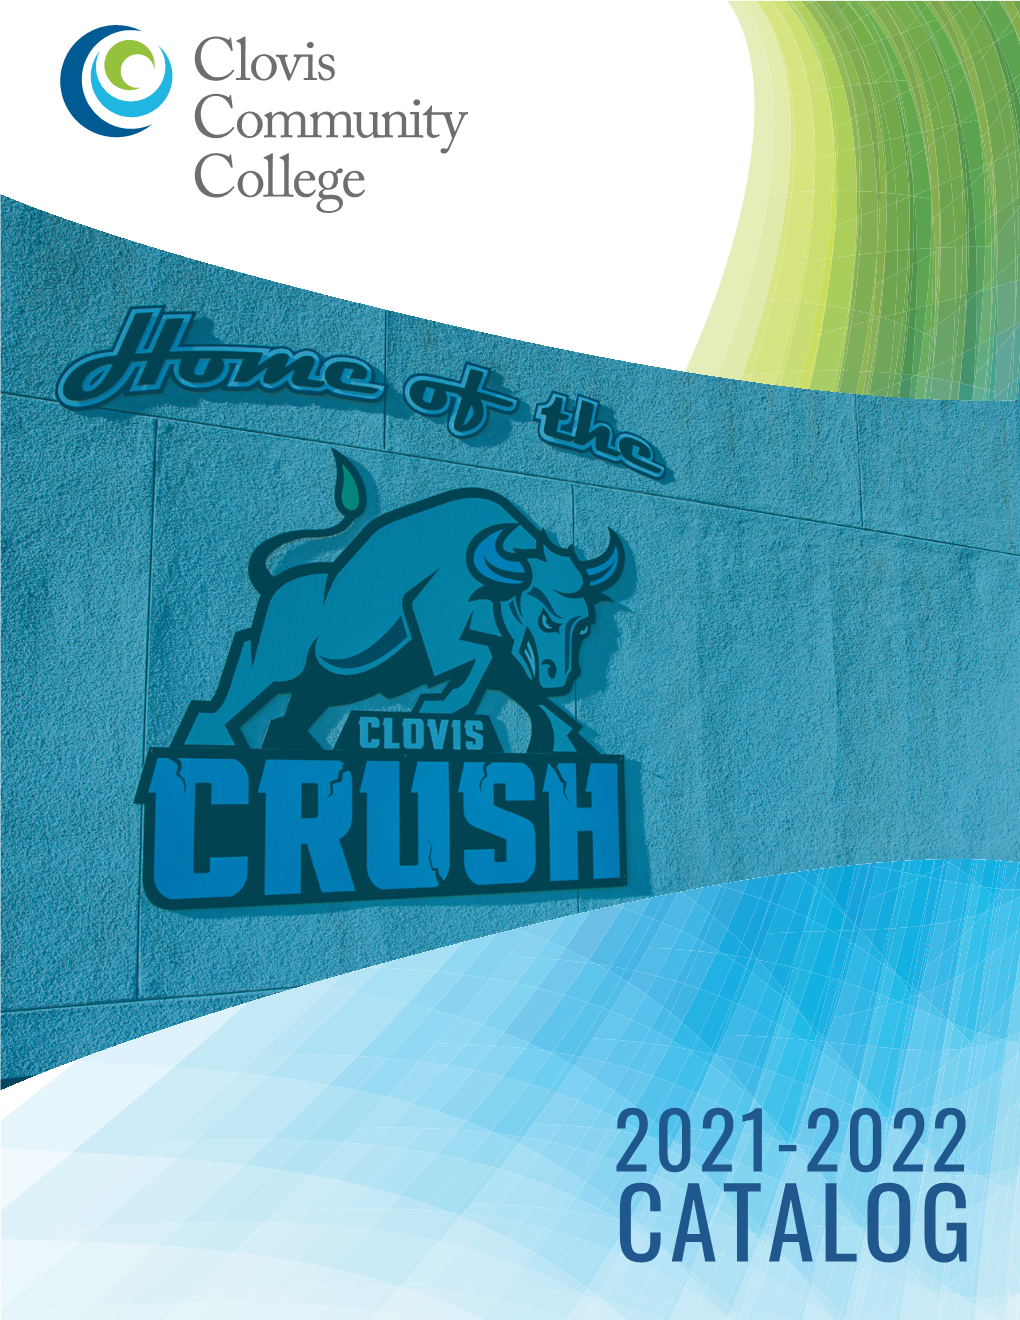 Clovis Community College 2021-2022 Catalog